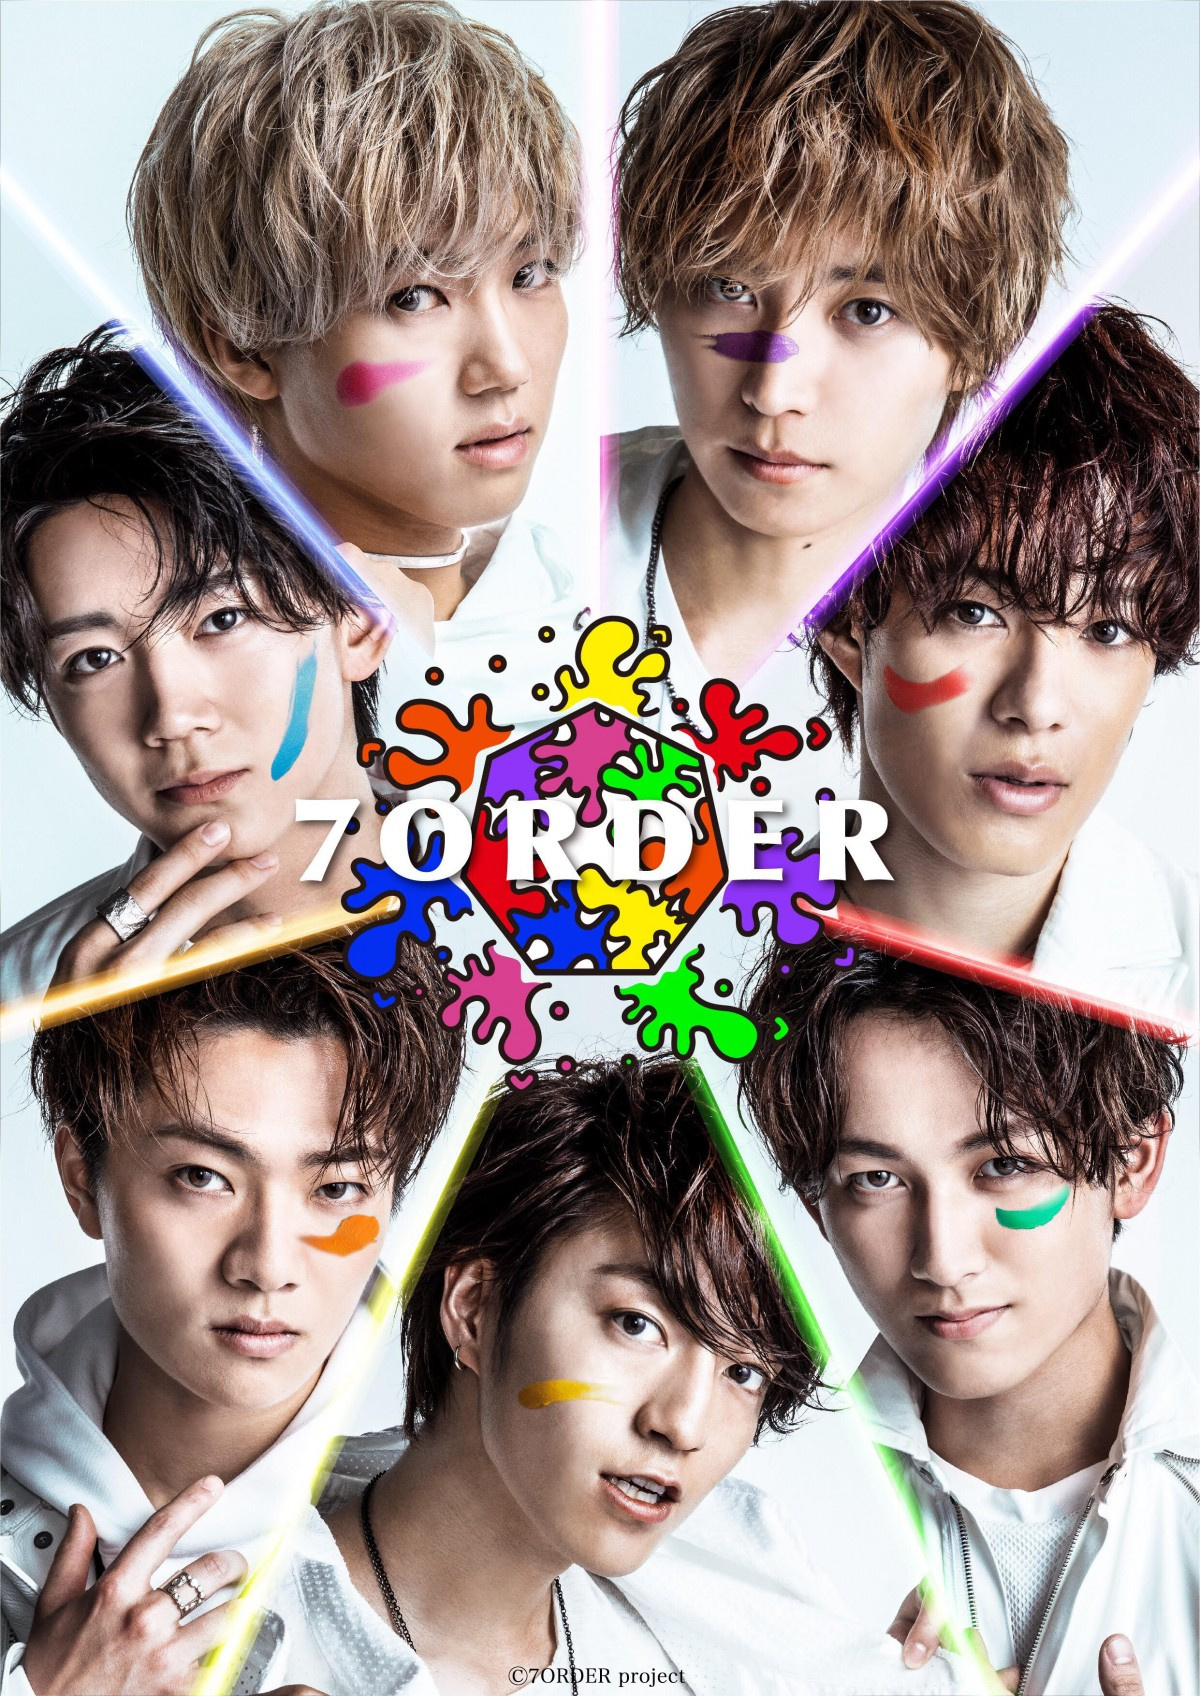 7orderproject 上海で初のファンミーティング開催決定 Oricon News